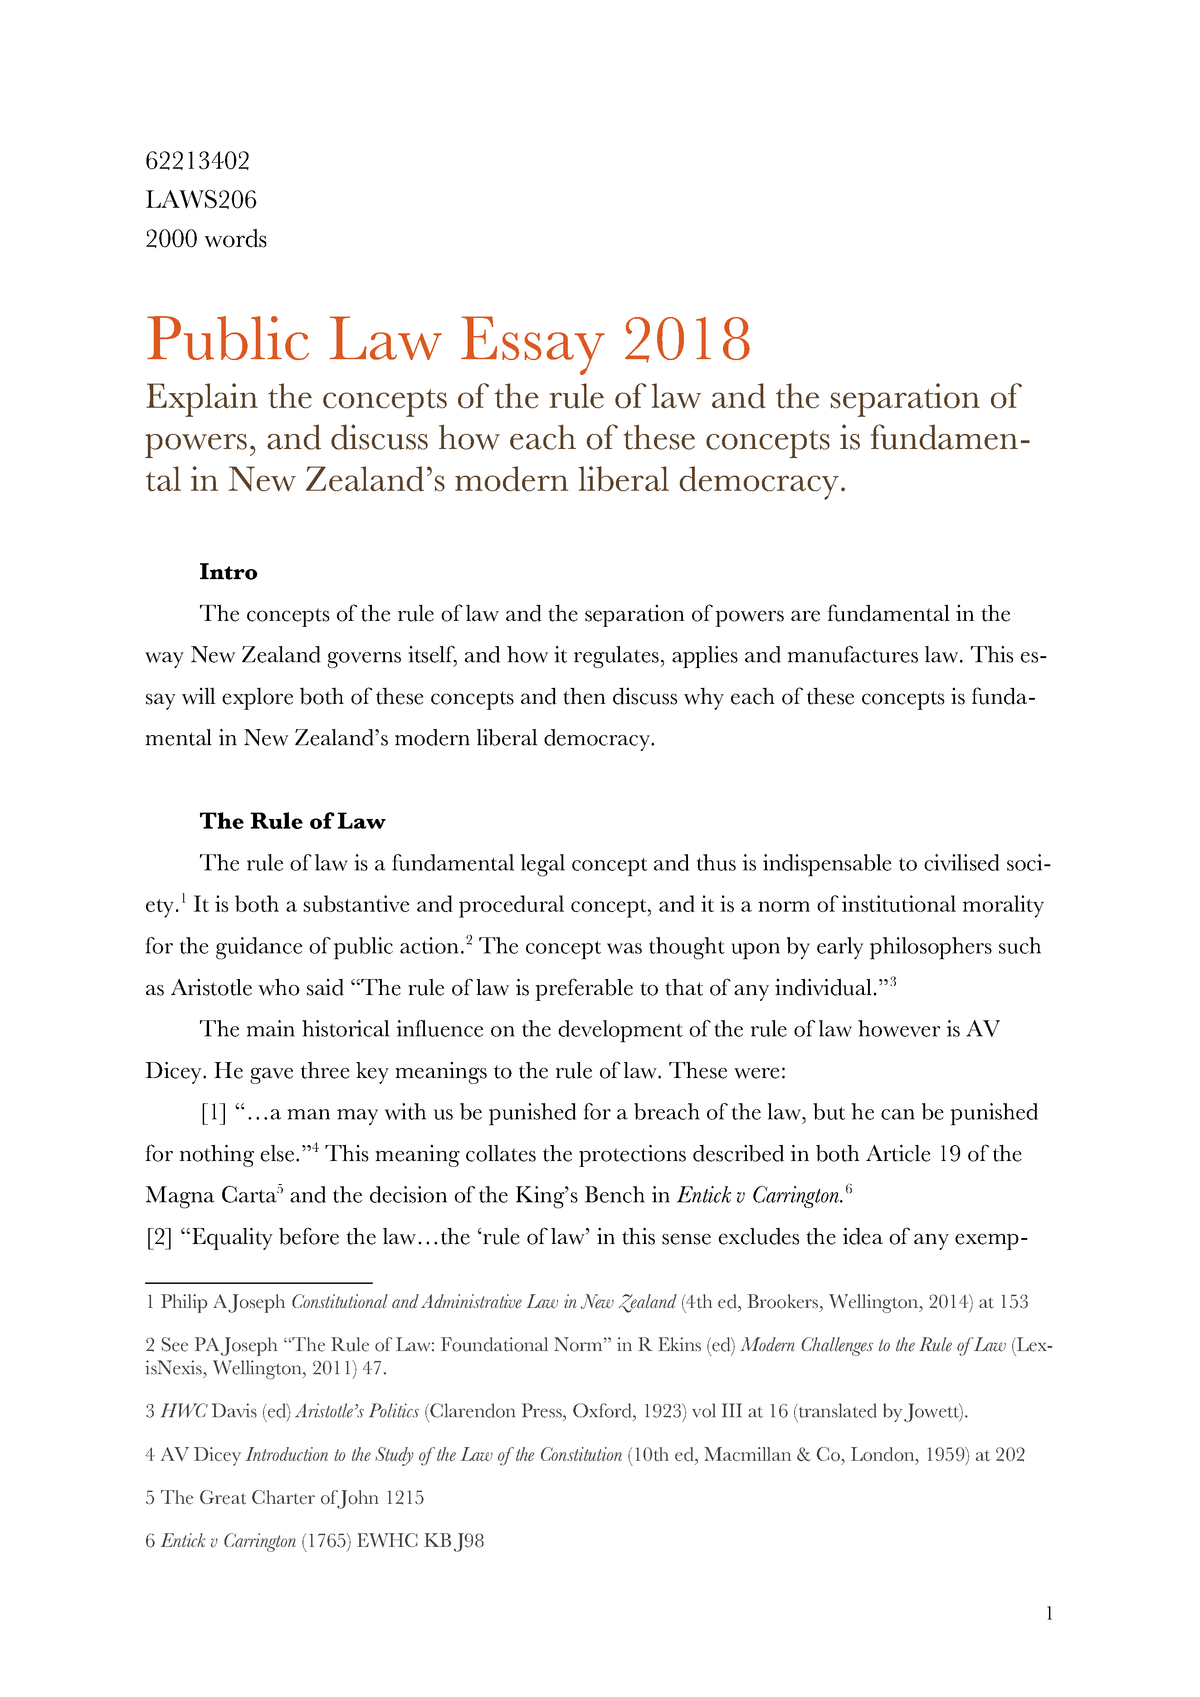 Public Law Essay Grade B Laws206 Ucnz Studocu